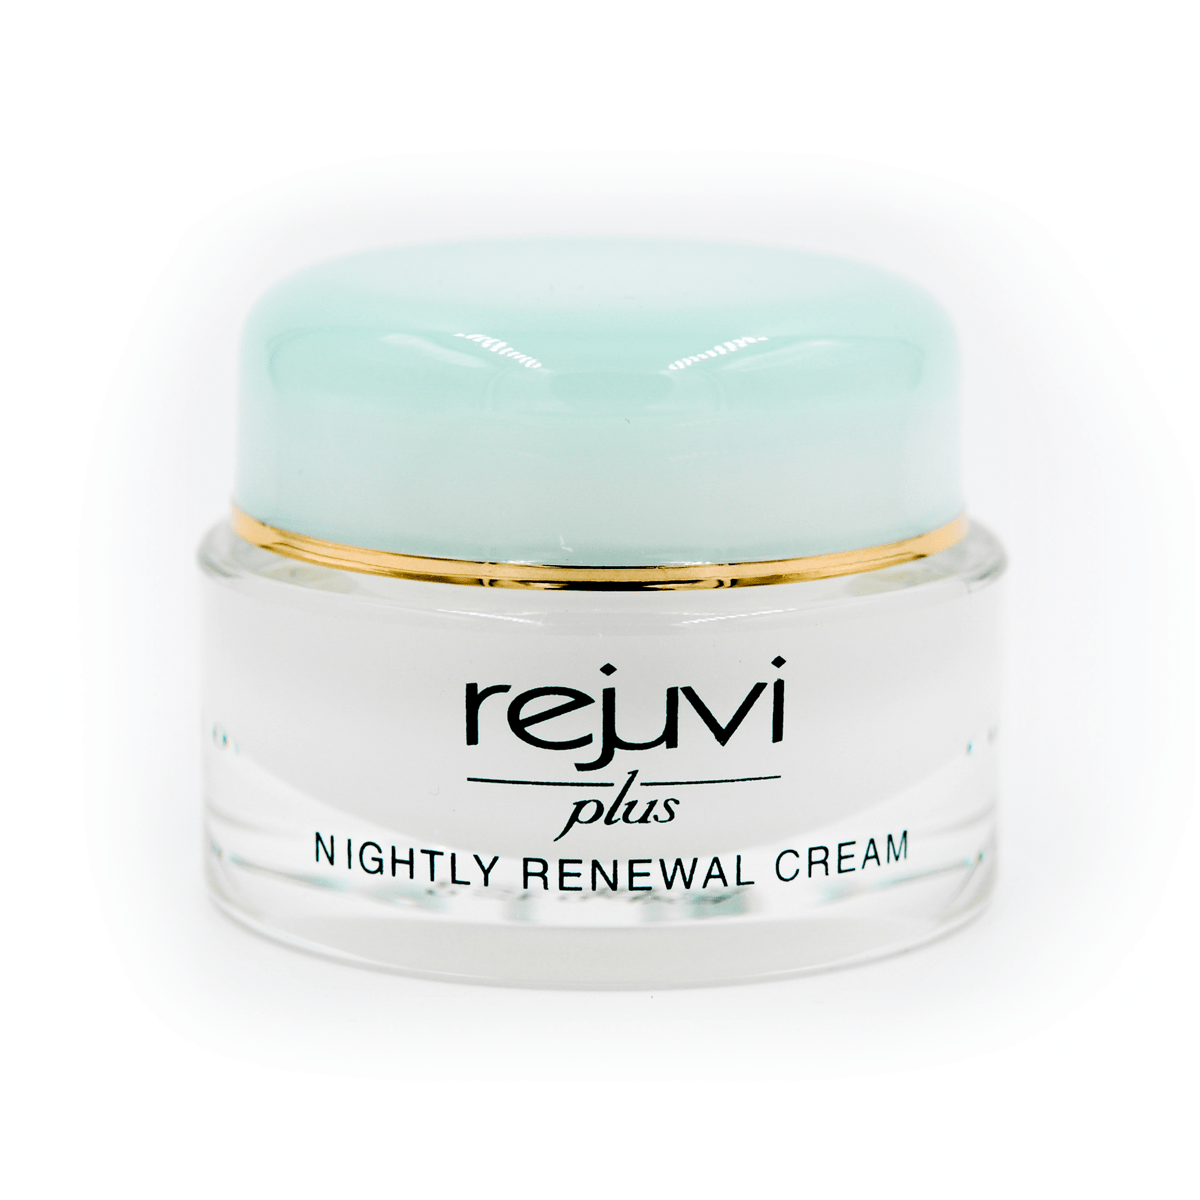 Rejuvi Plus Nightly Renewal Cream (Normal) 1 oz/29g